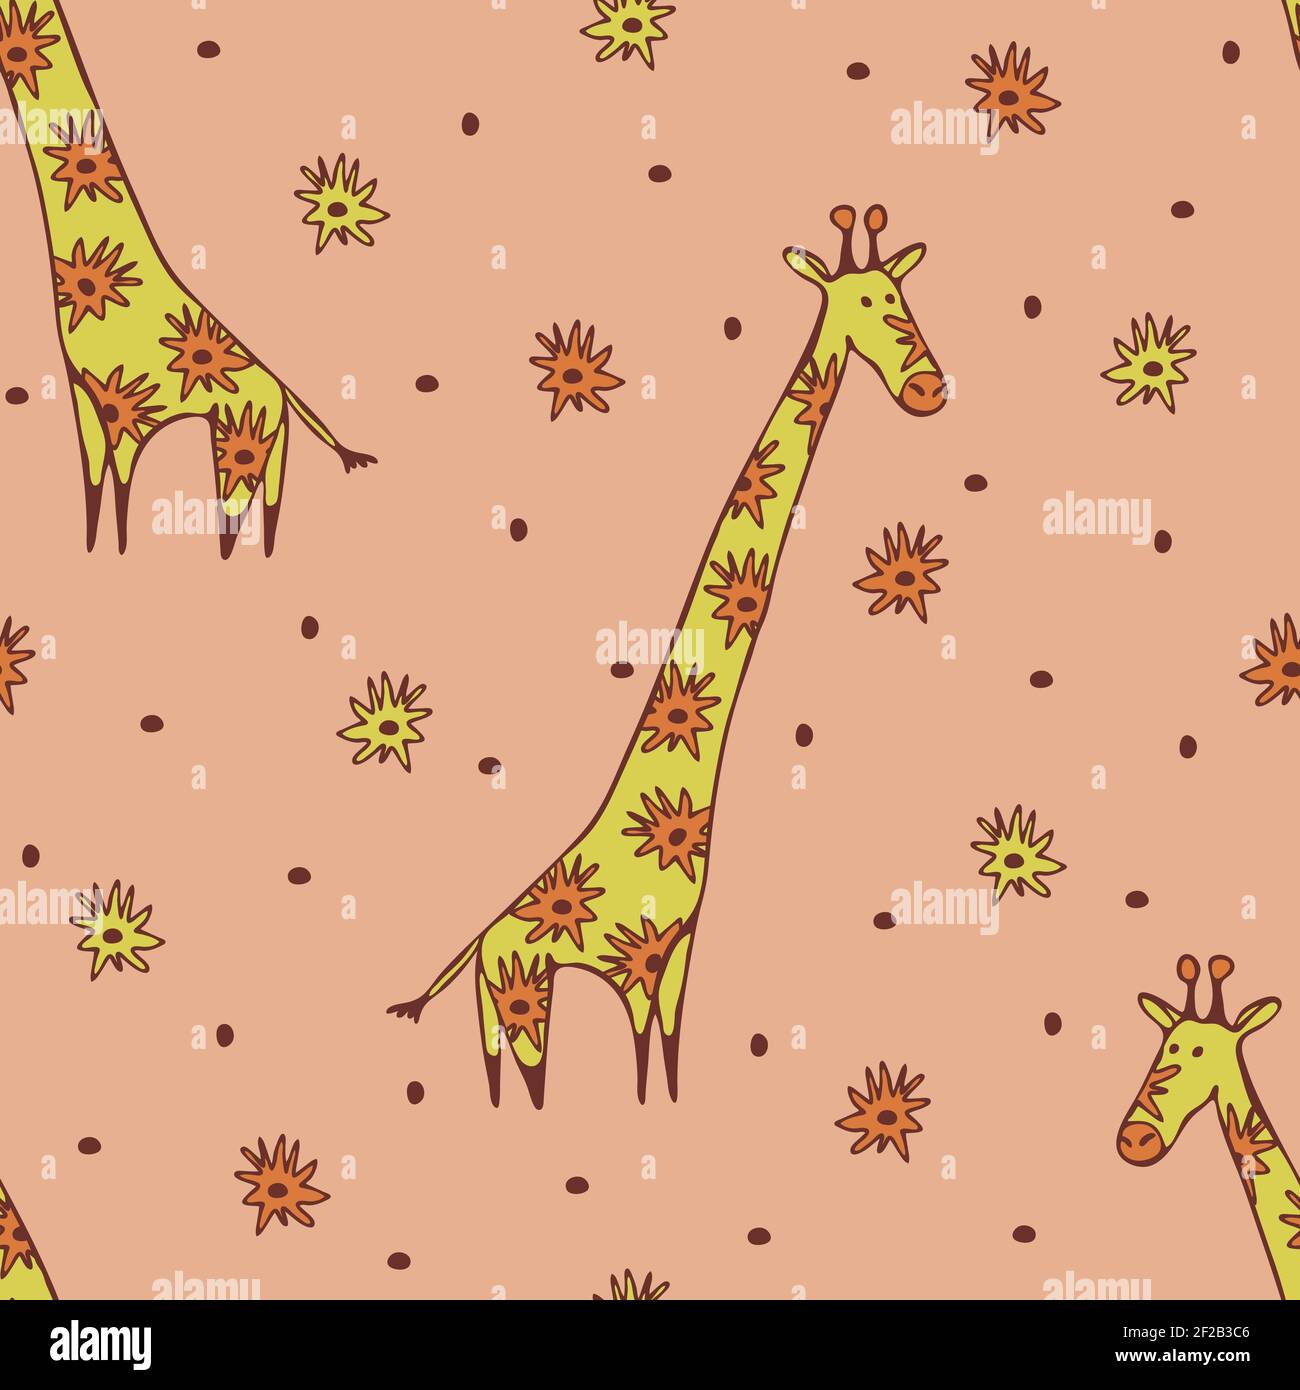 Giraffe iPhone Wallpapers  Top Free Giraffe iPhone Backgrounds   WallpaperAccess